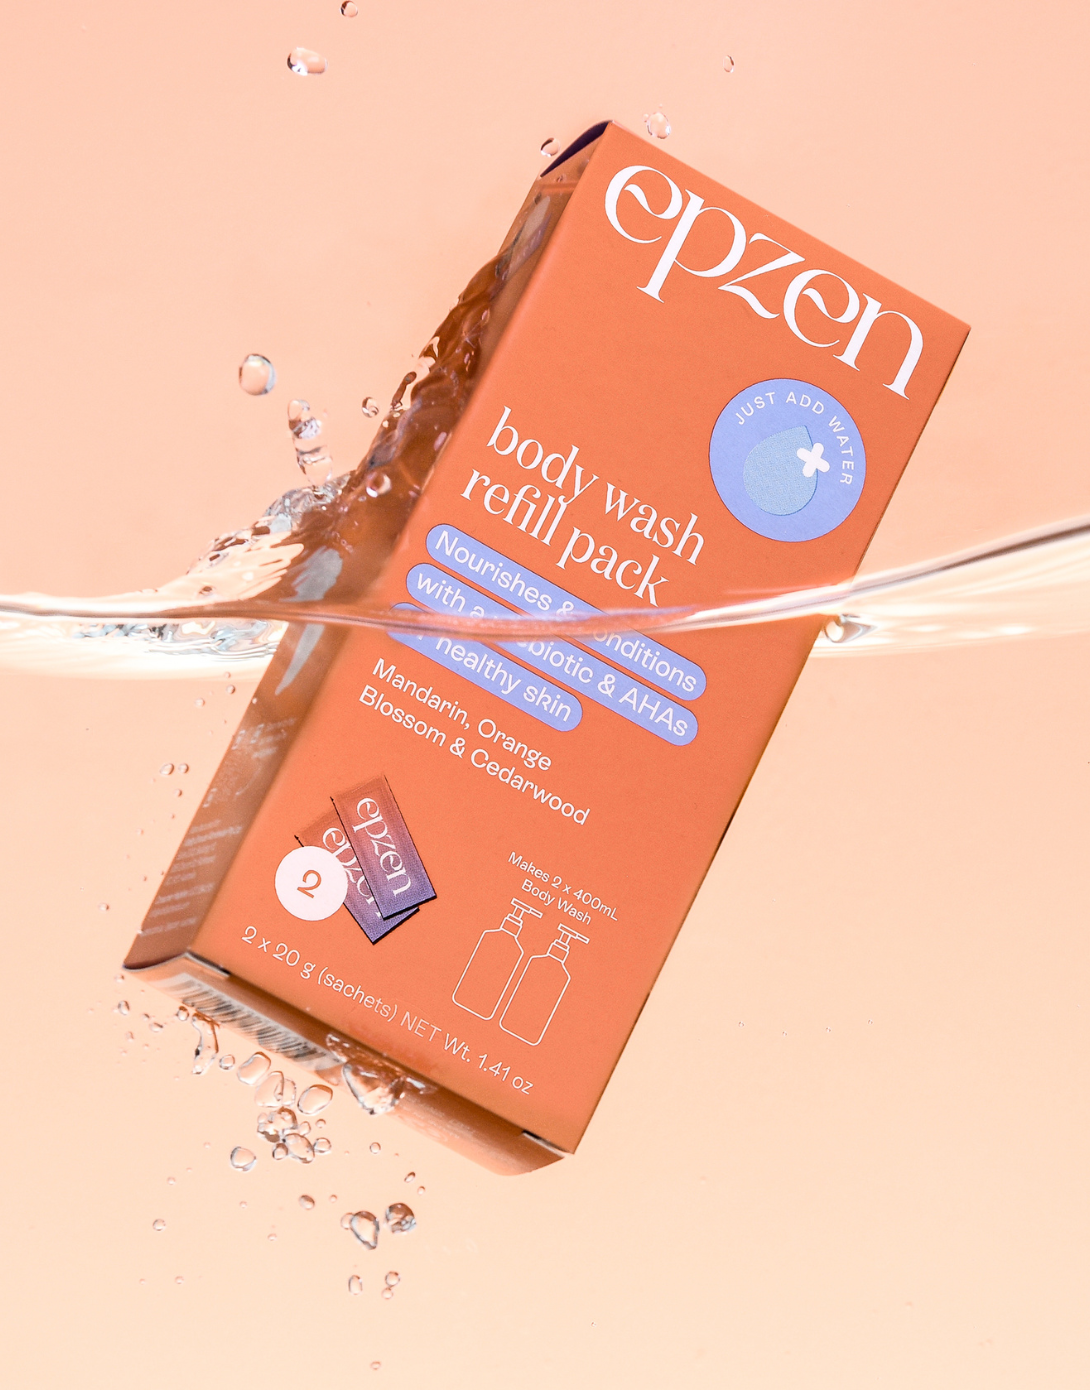 EpZen Powder To Gel Body Wash Refill Pack 2x20g, Mandarin, Orange Blossom & Cedarwood